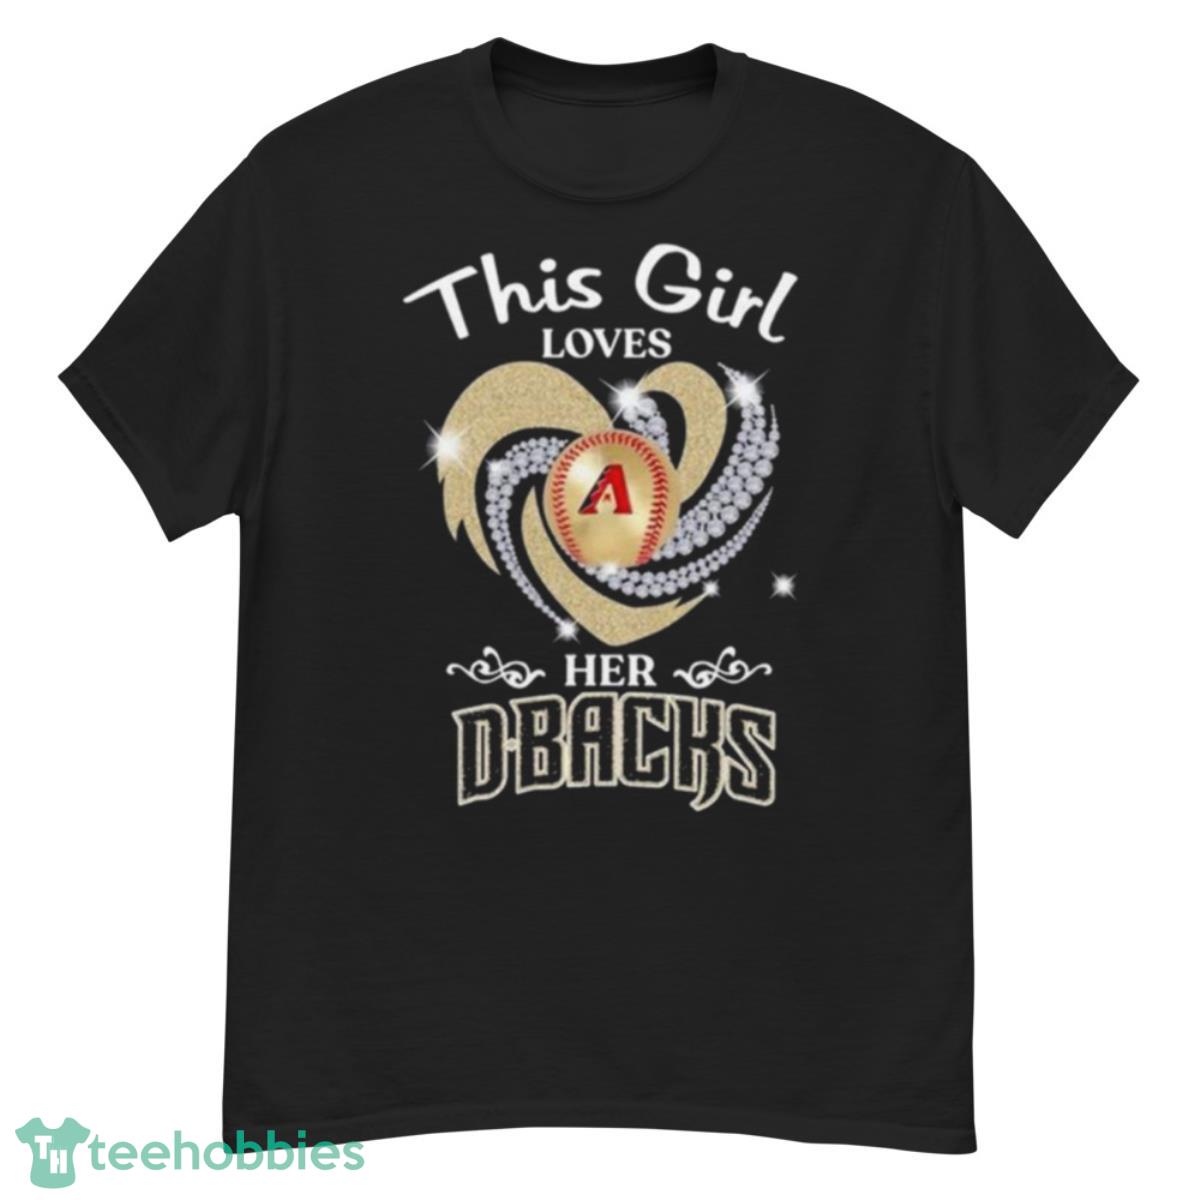 Arizona Diamondbacks 2023 This Girl Loves Her D Backs Diamond Shirt - G500 Men’s Classic T-Shirt